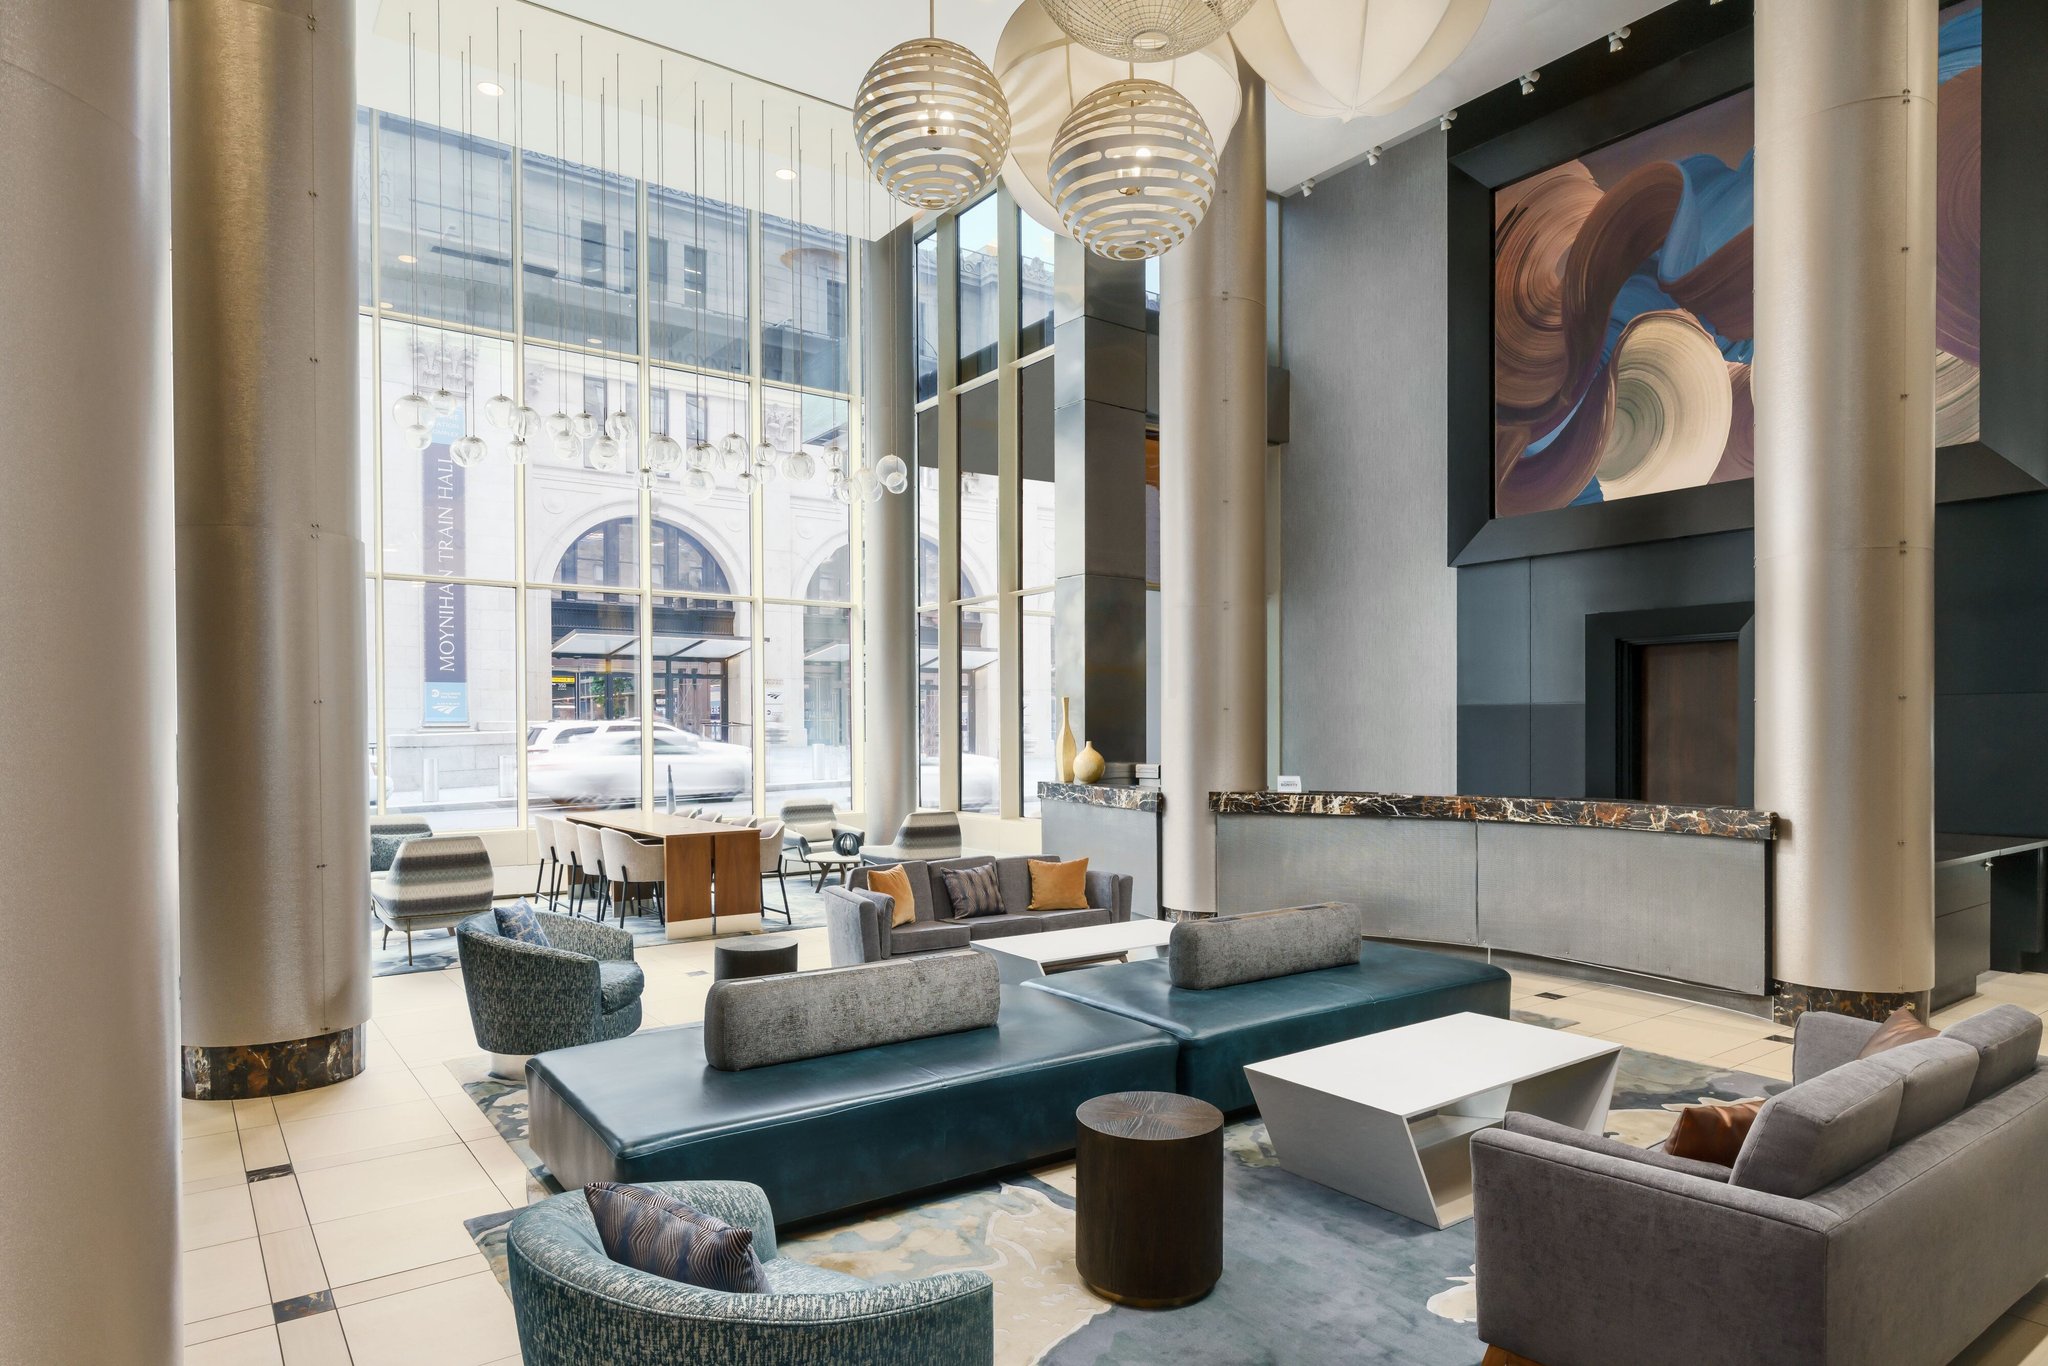 Fairfield Inn And Suites New York Midtown Manhattanpenn Station